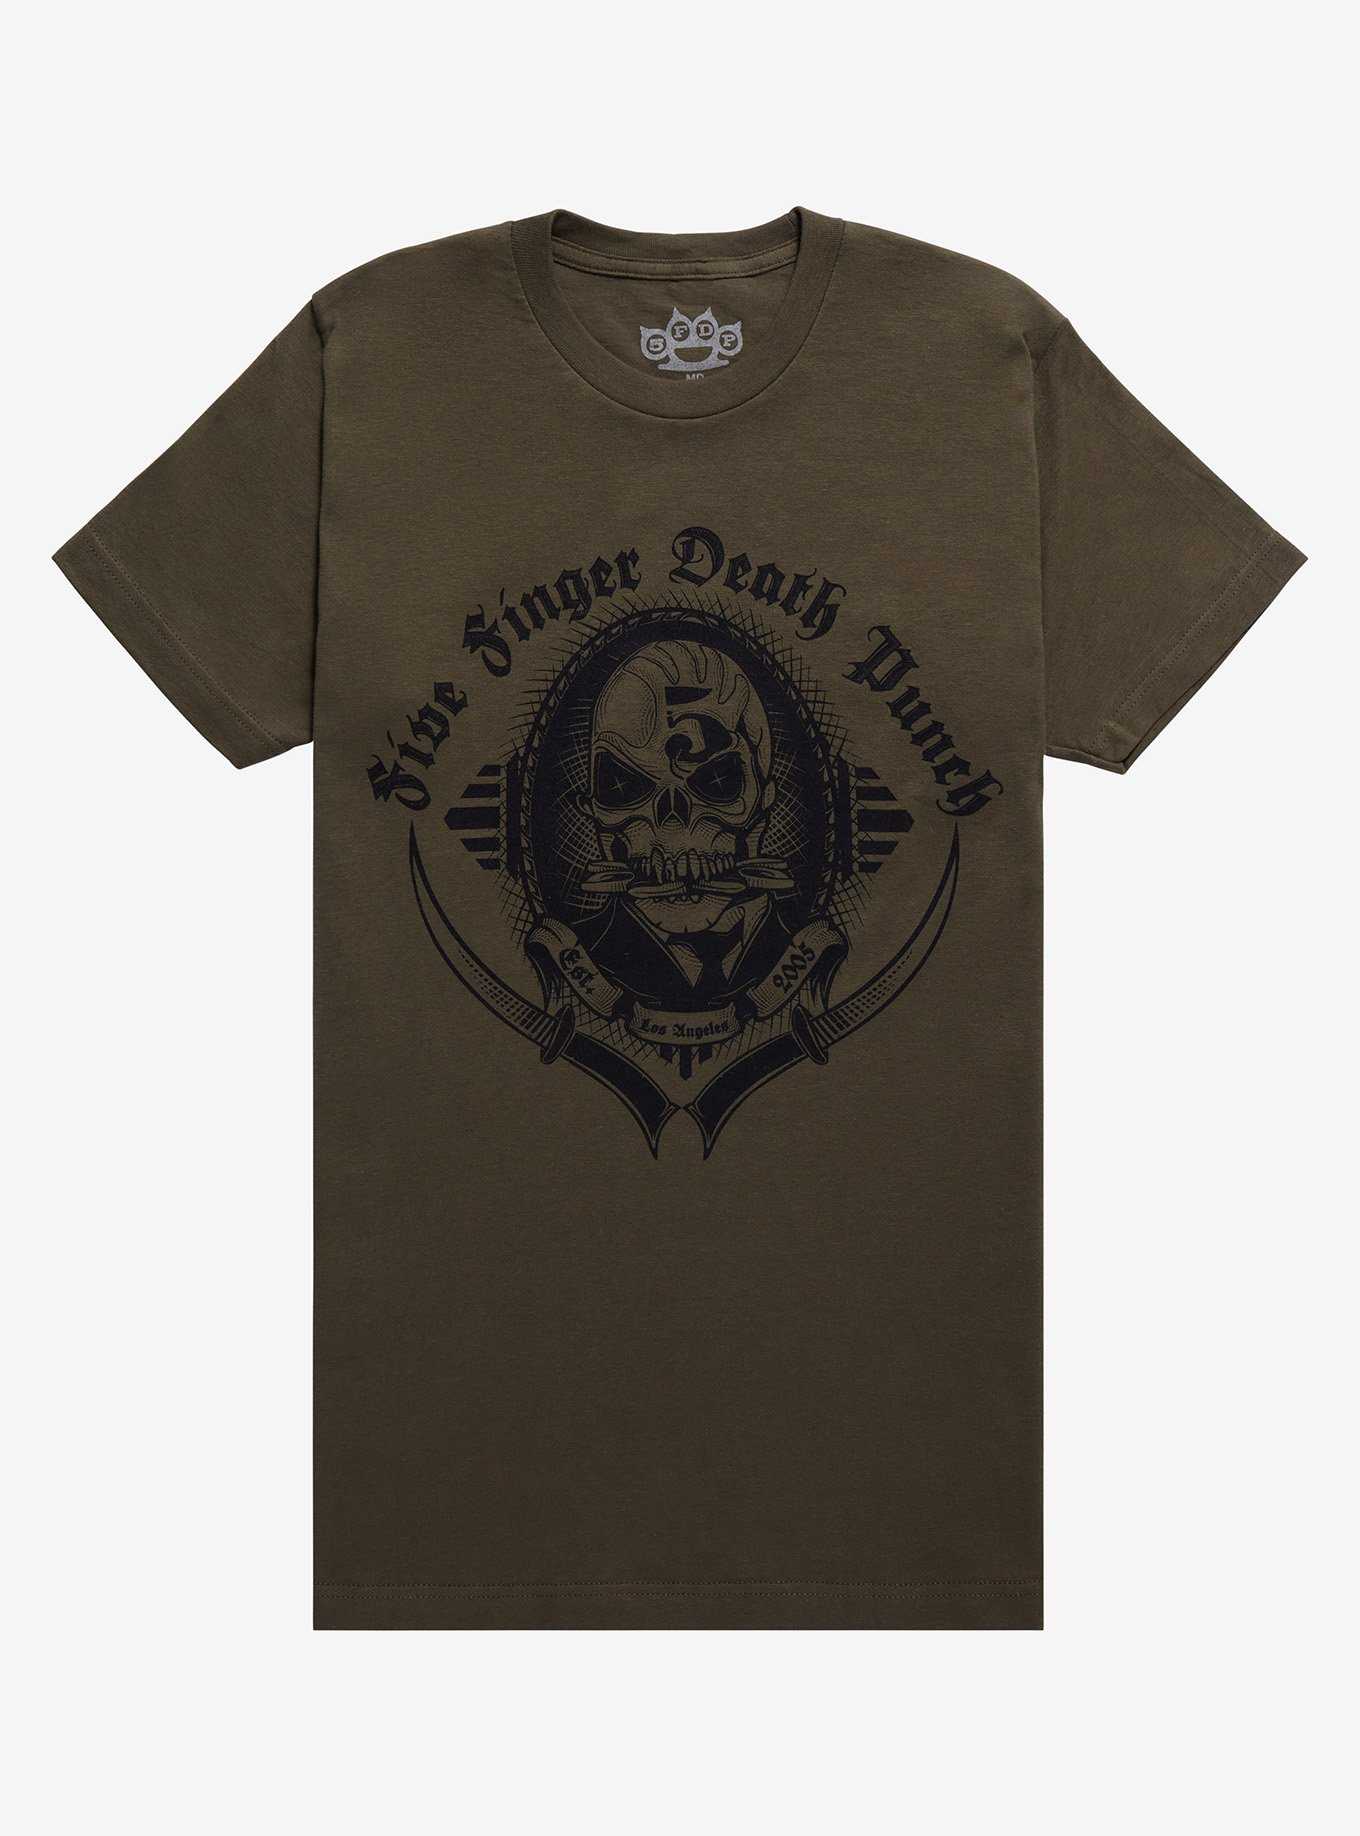 Five Finger Death Punch Skull Crest Boyfriend Fit Girls T-Shirt, , hi-res